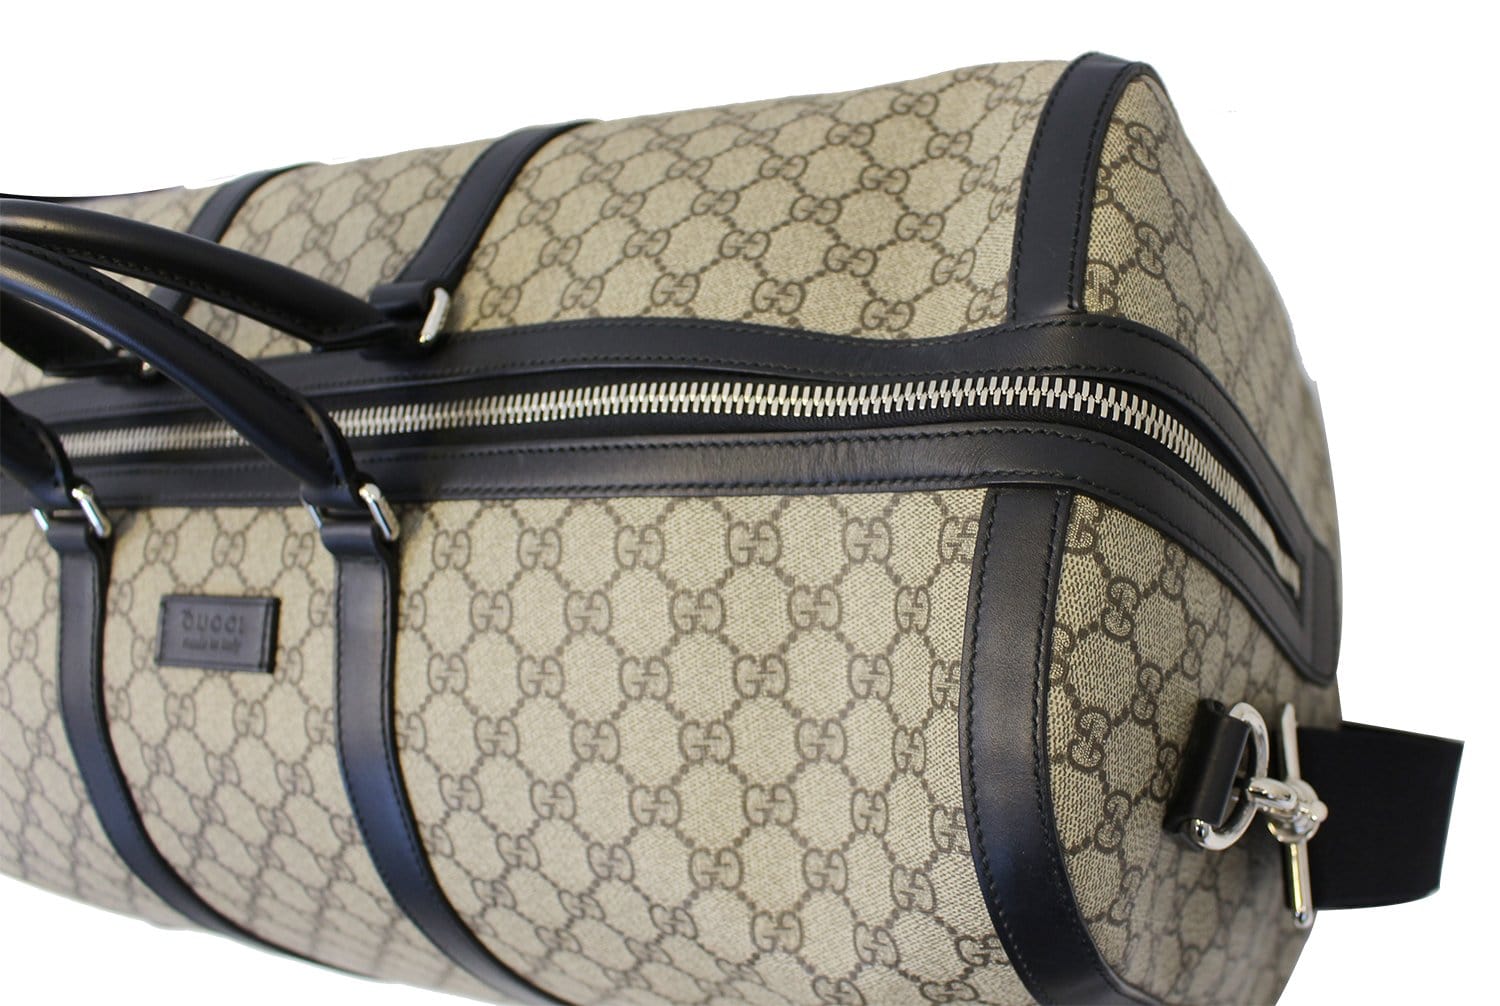 Luggage & Travel bags Gucci - GG supreme duffle bag - 406380KHN7N9772